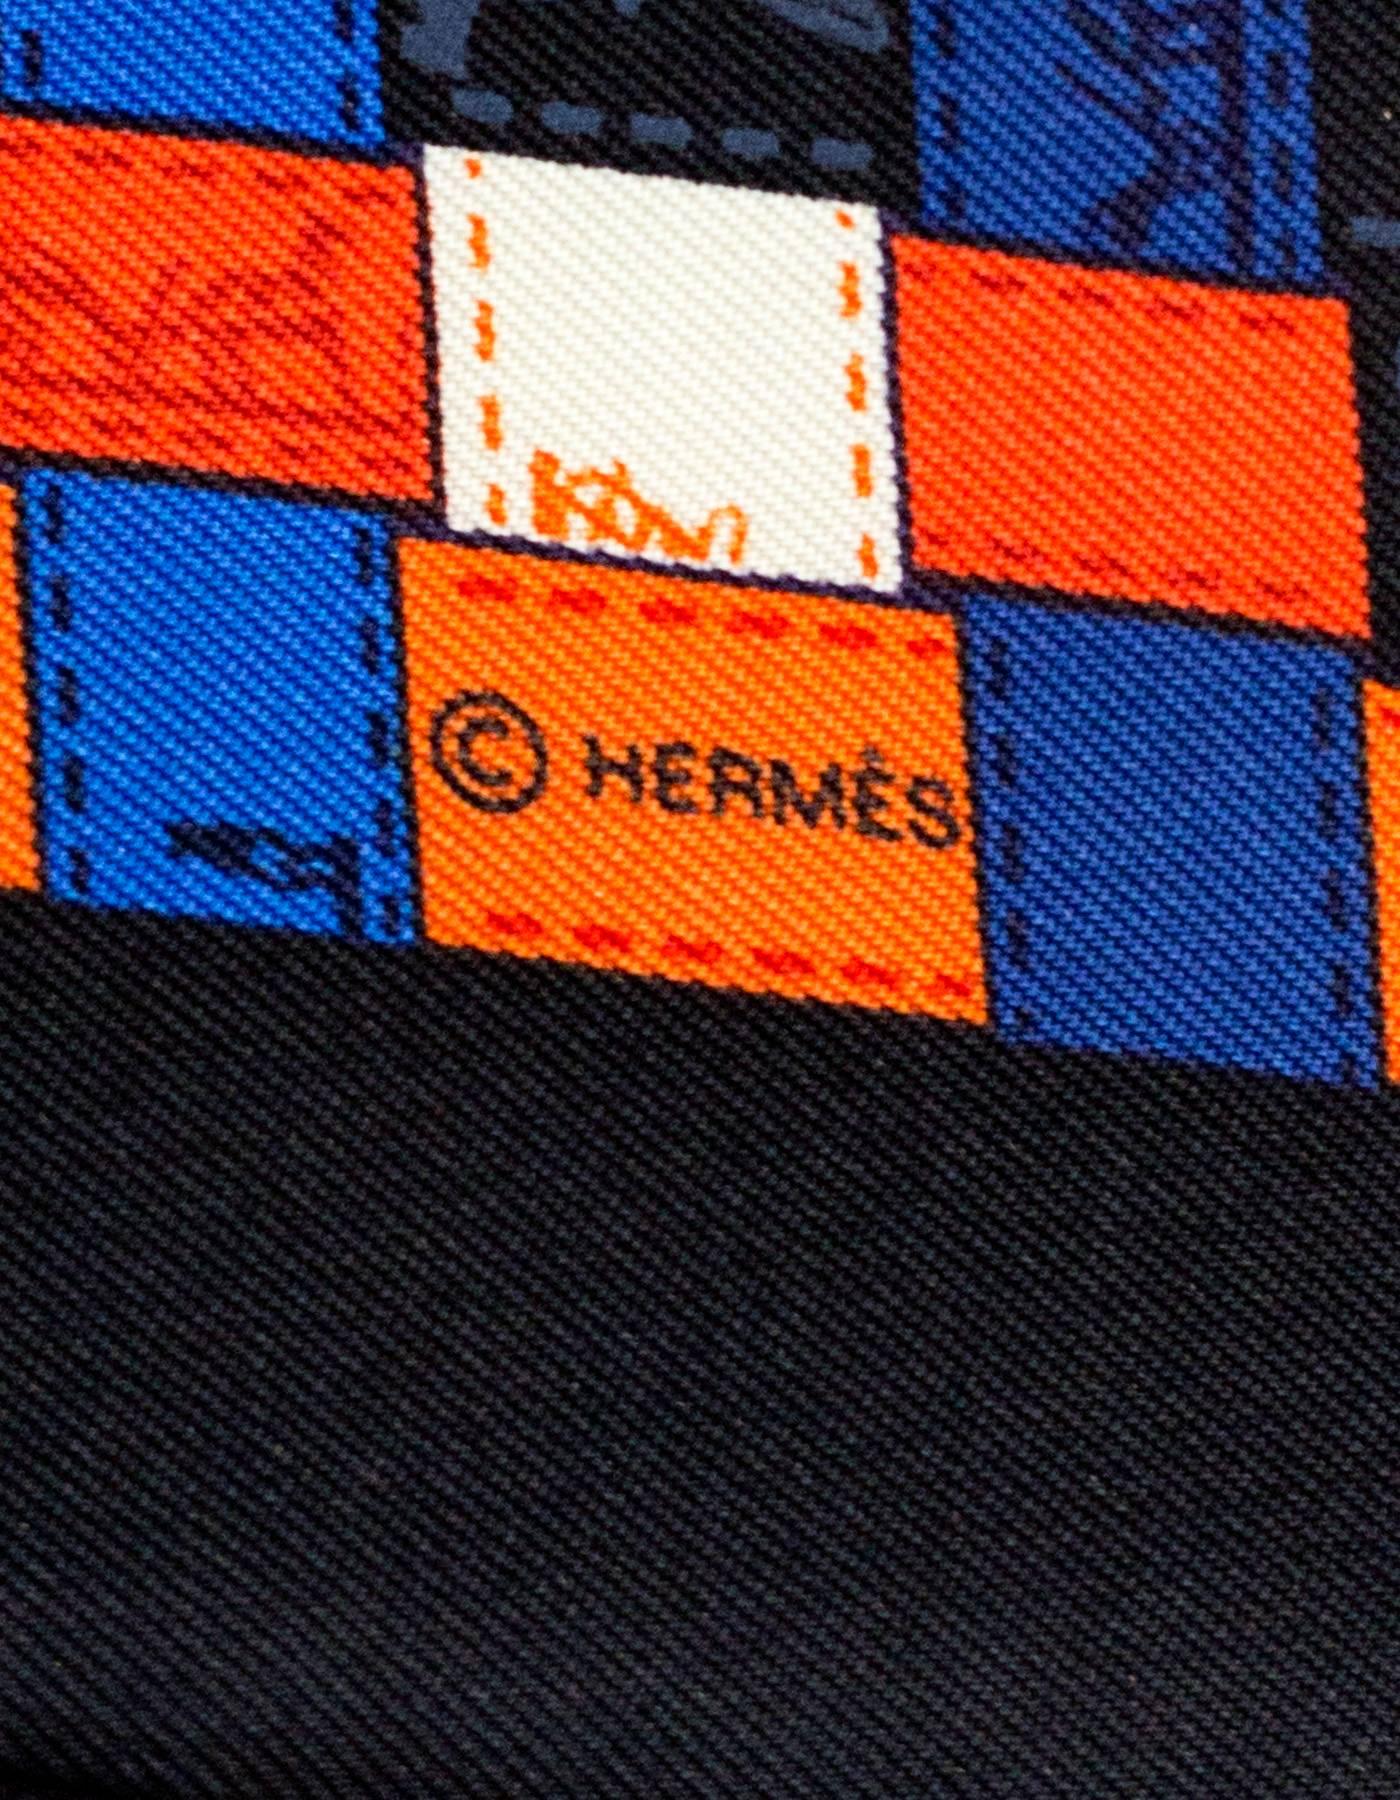 Hermes Multi-Colored Woven Ribbon 